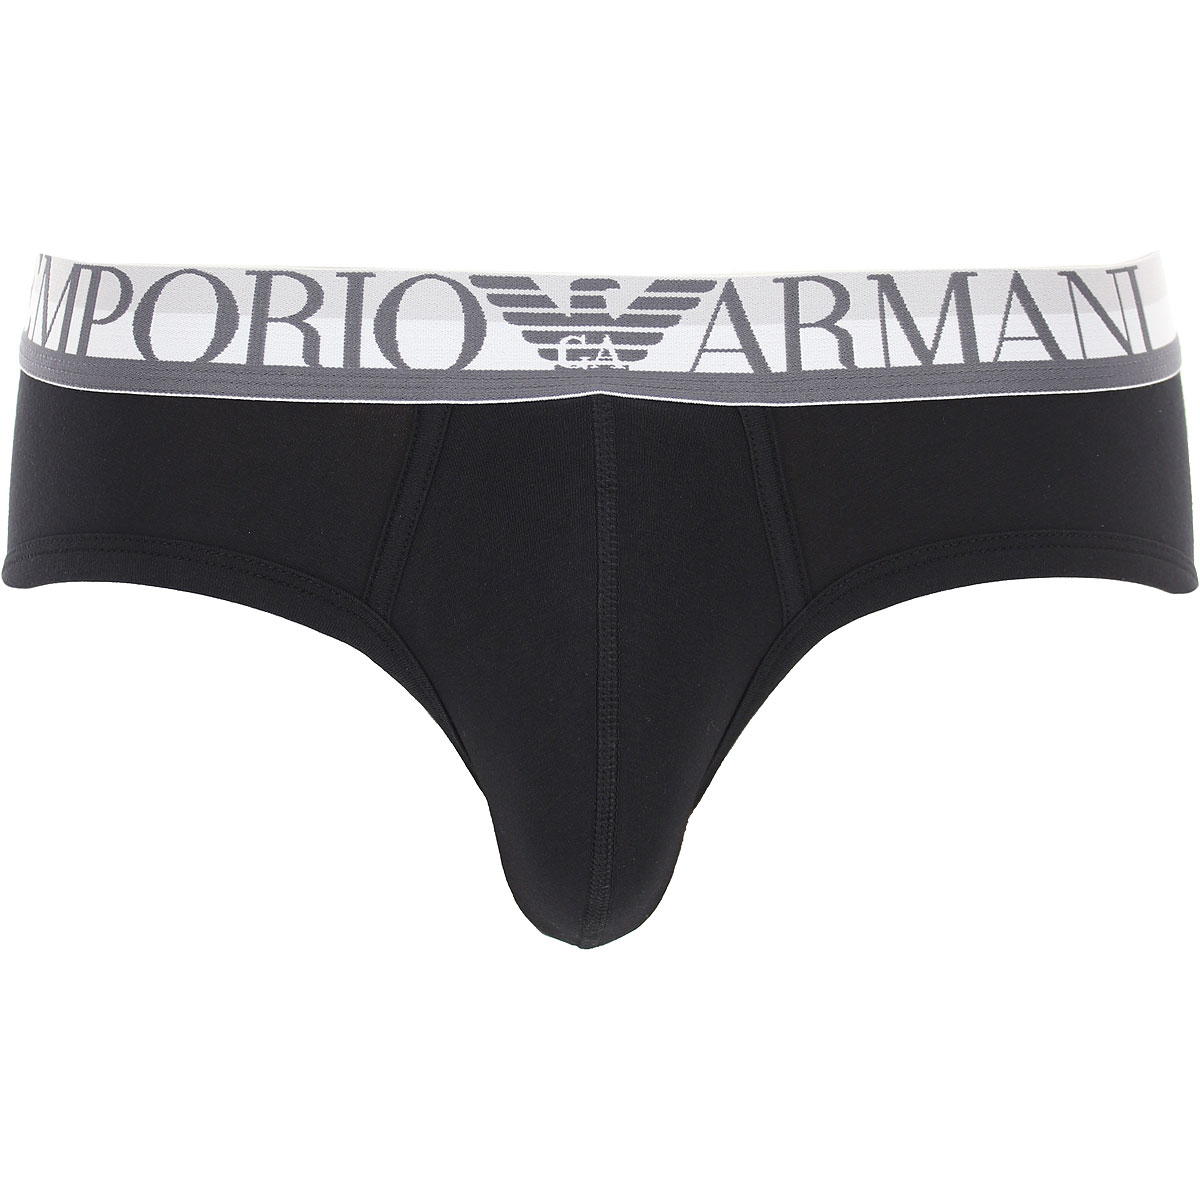 Mens Underwear Emporio Armani, Style code: 111617-2r525-00020